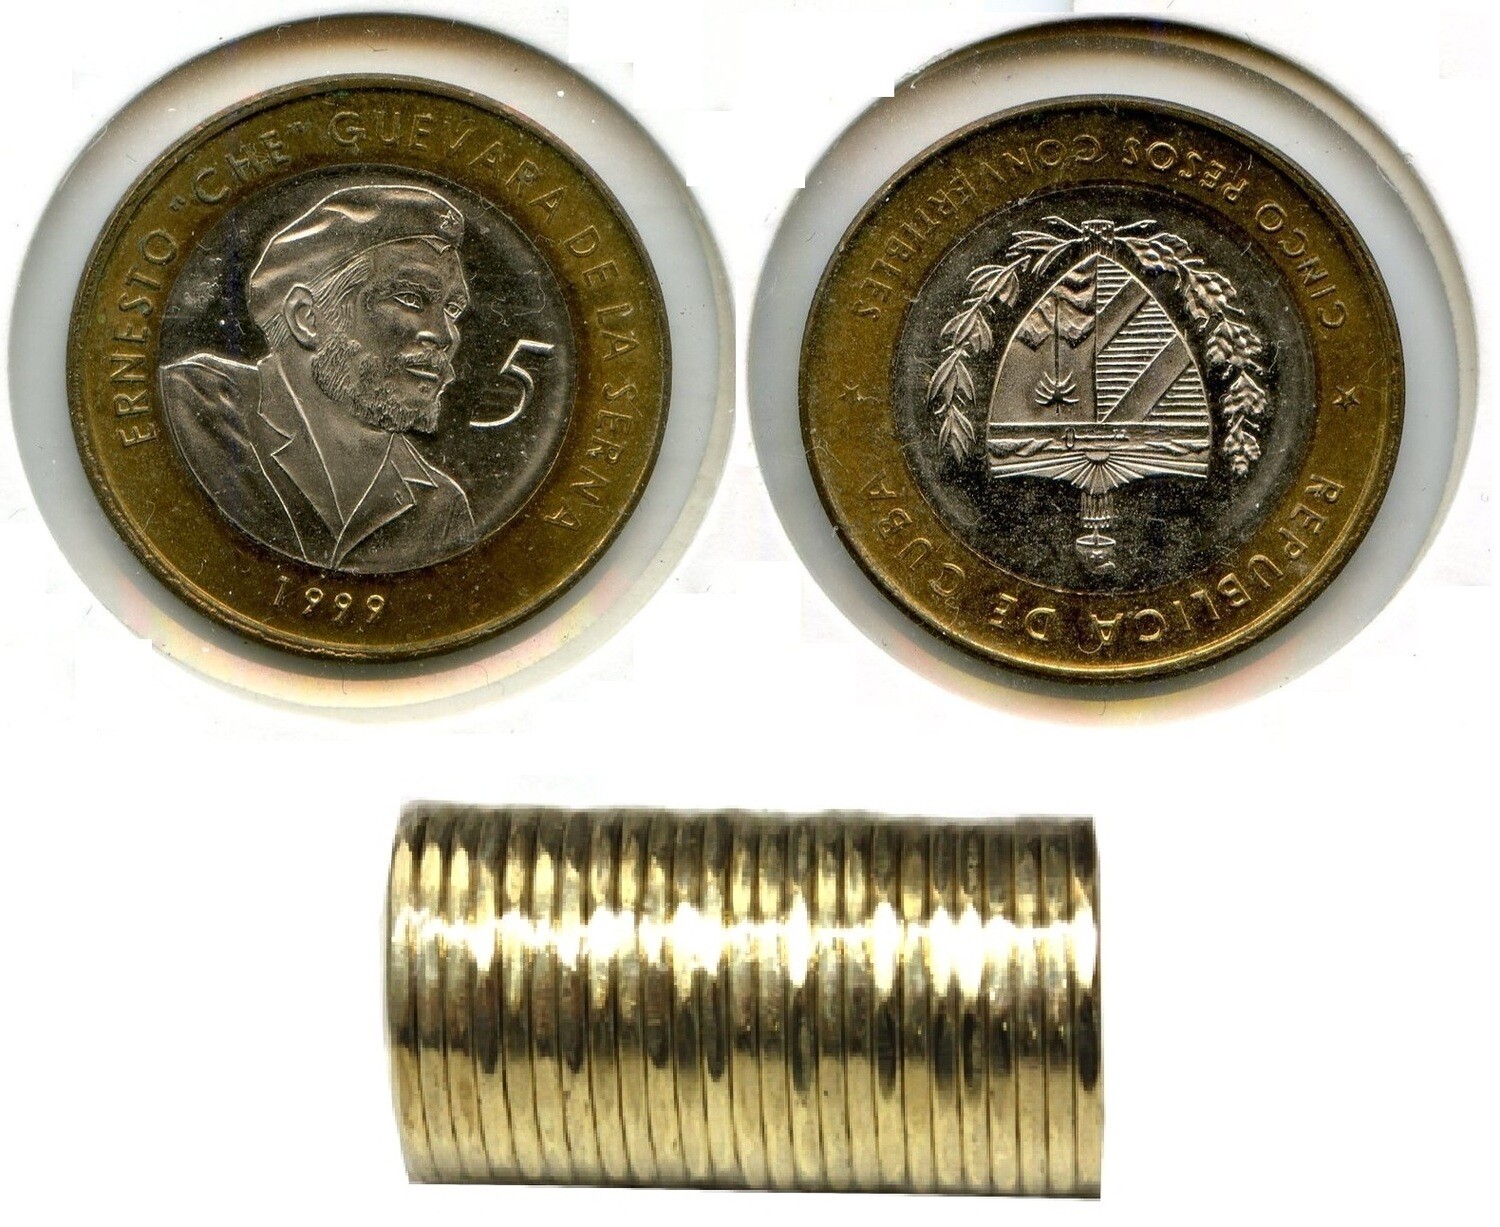 Cuba. 1999. 5 pesos CUC - roll of 20 coins. Ernesto Che Guevara. Type: 1999. Bi-Metallic (Ni-Steel + Brass - Steel) 4.520 g. KM#730. UNC